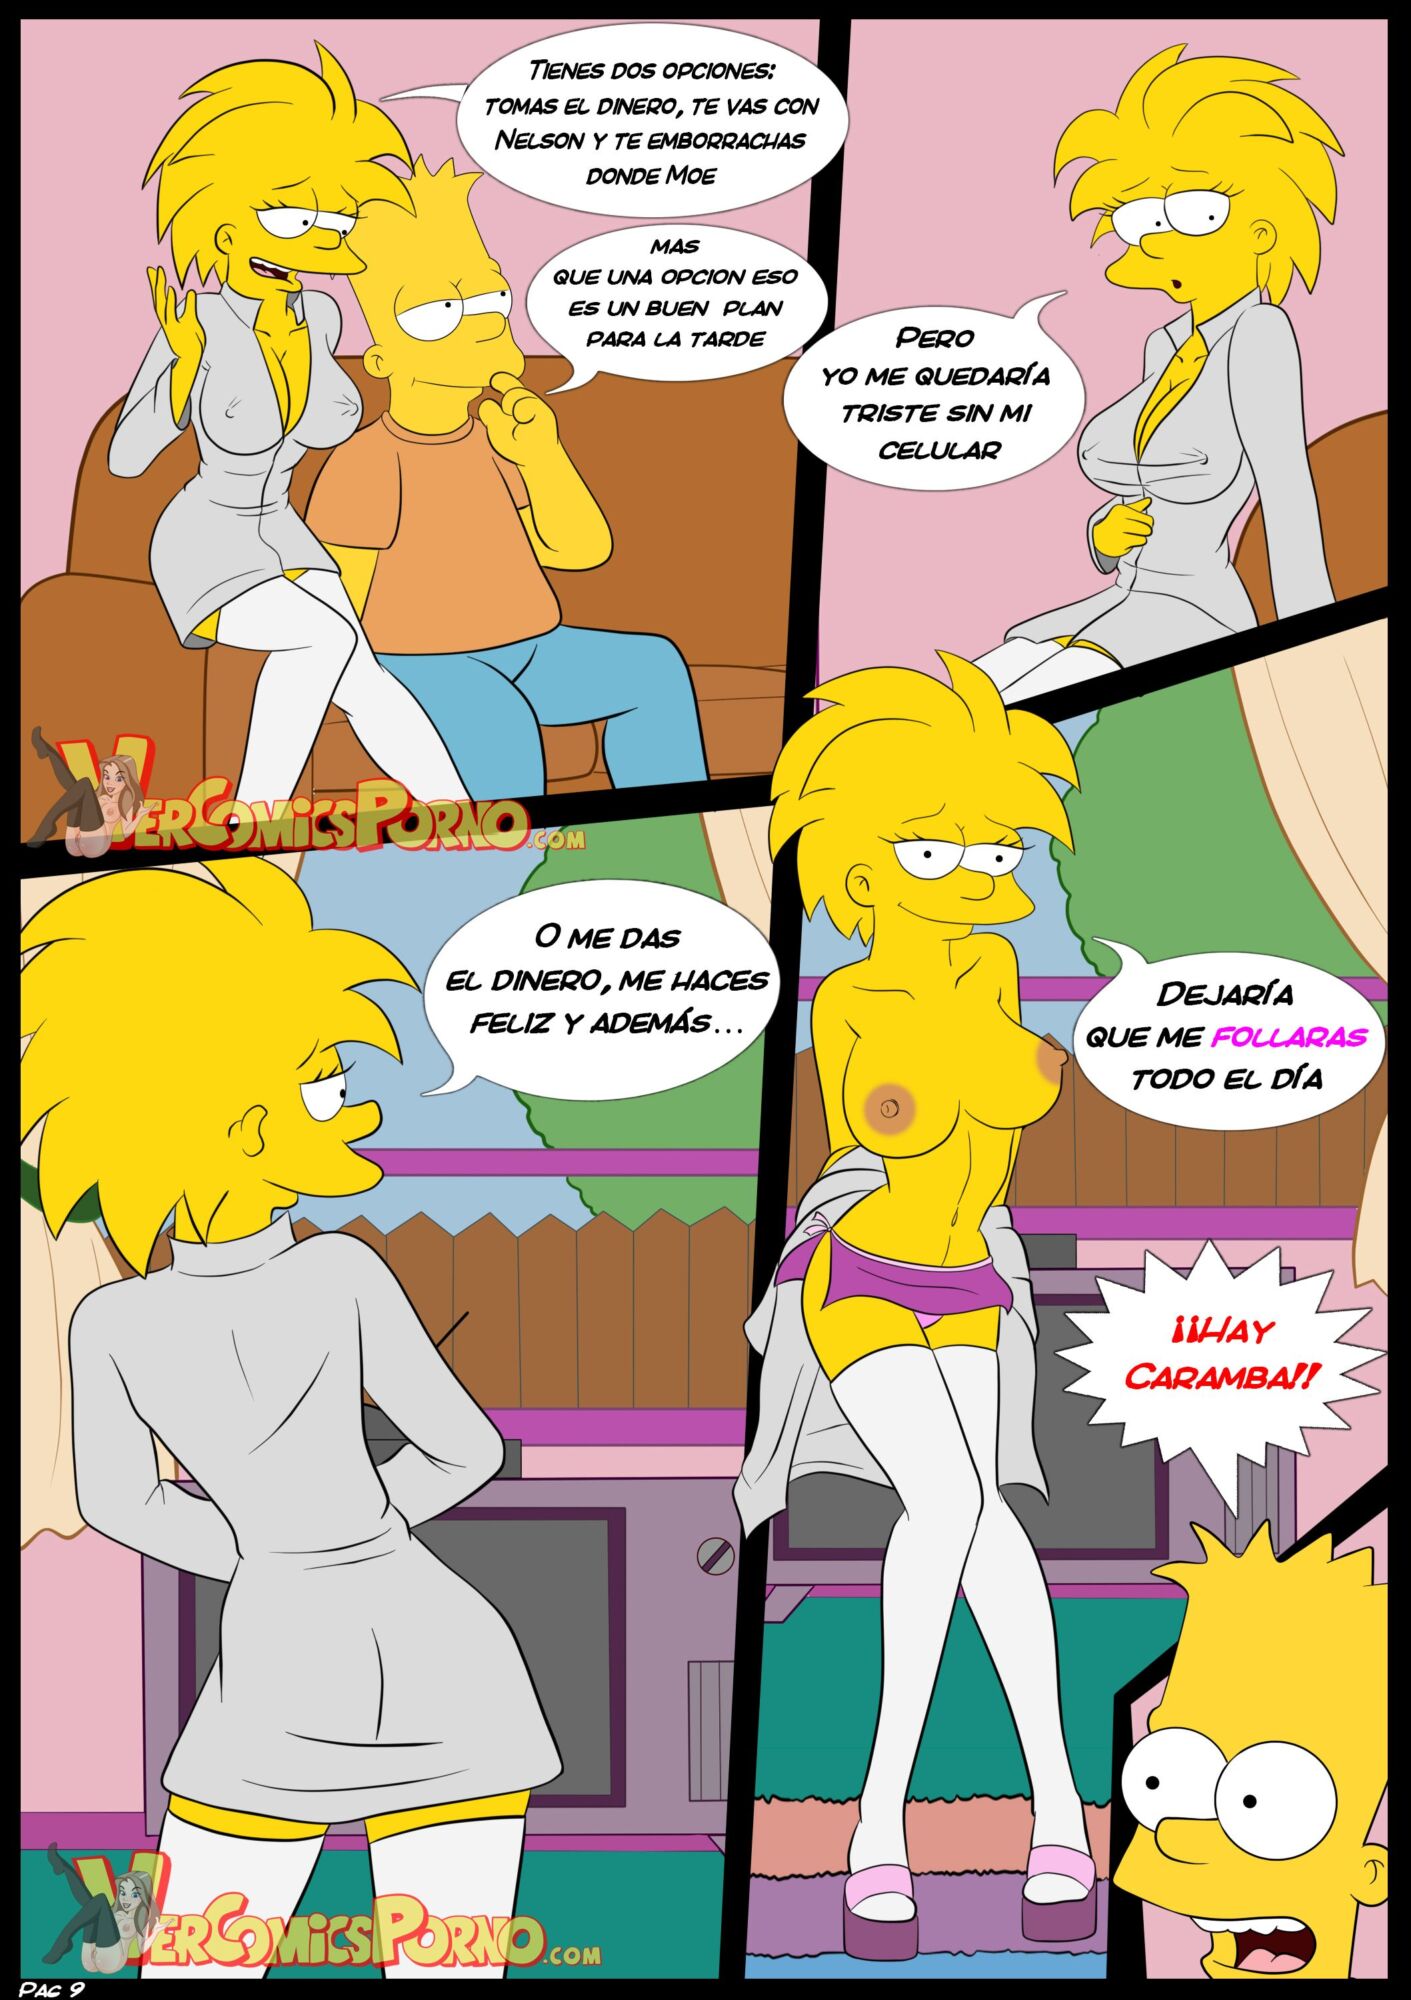 Image Los Simpsons Viejas Costumbres.2 La seduccion ESP 0 in Private upload...